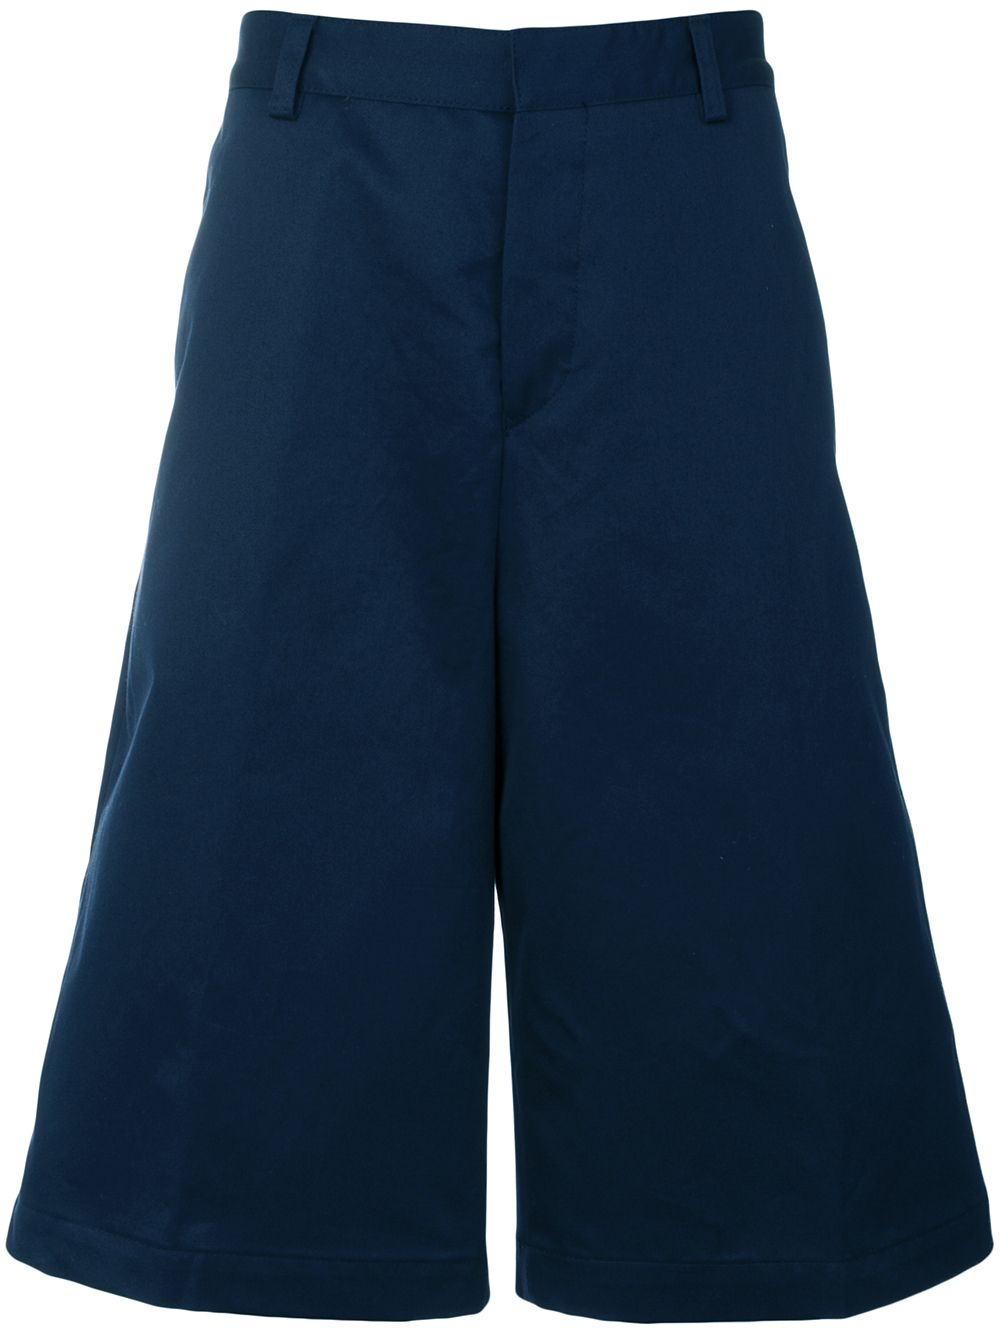 Kenzo classic tailored shorts от Kenzo